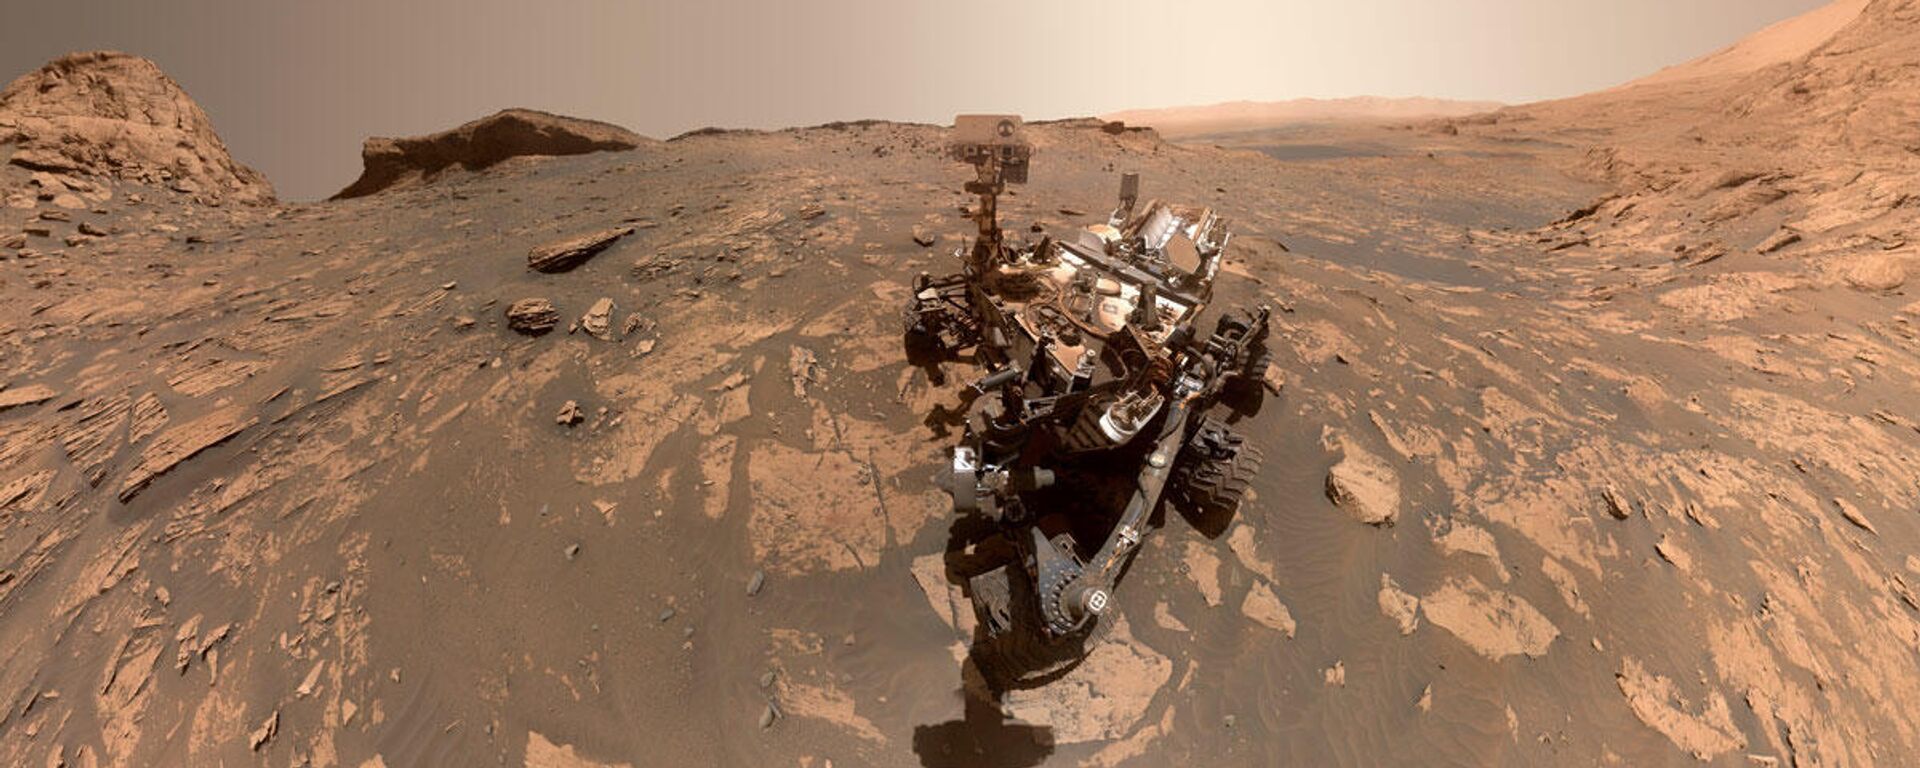 Una selfi del róver Curiosity tomada en Marte - Sputnik Mundo, 1920, 21.02.2022